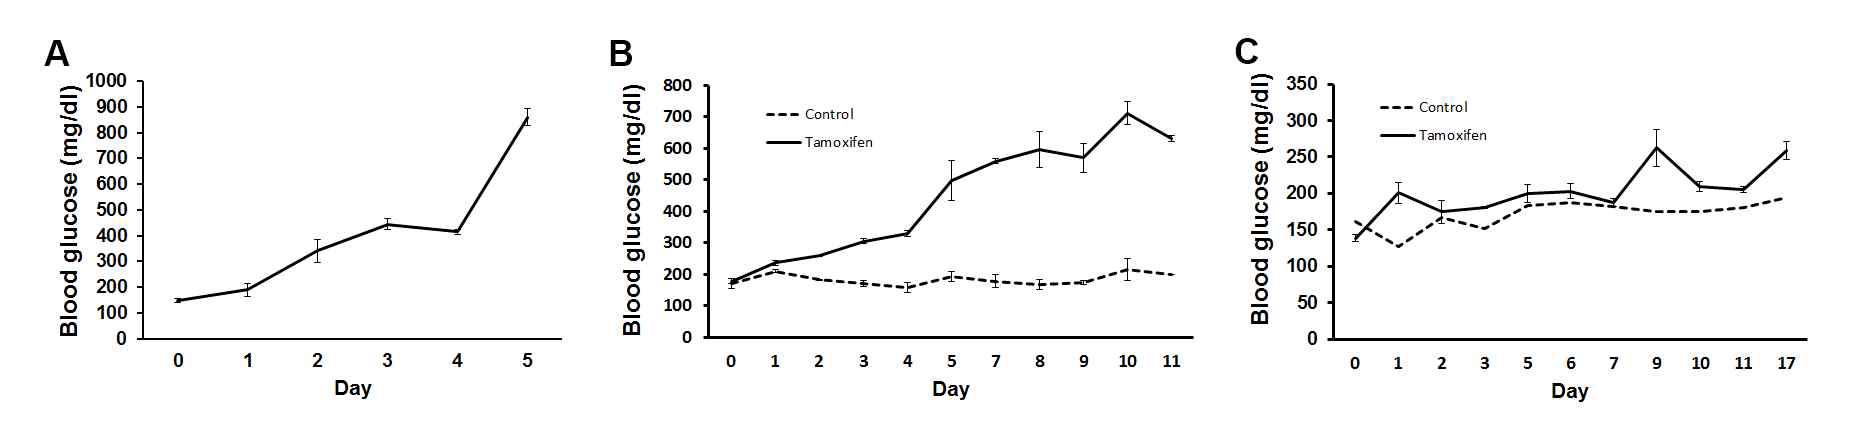 Gck flox; Pdx1-CreER mouse의 tamoxifen 투여량에 따른 혈중 포도당 농도 변화